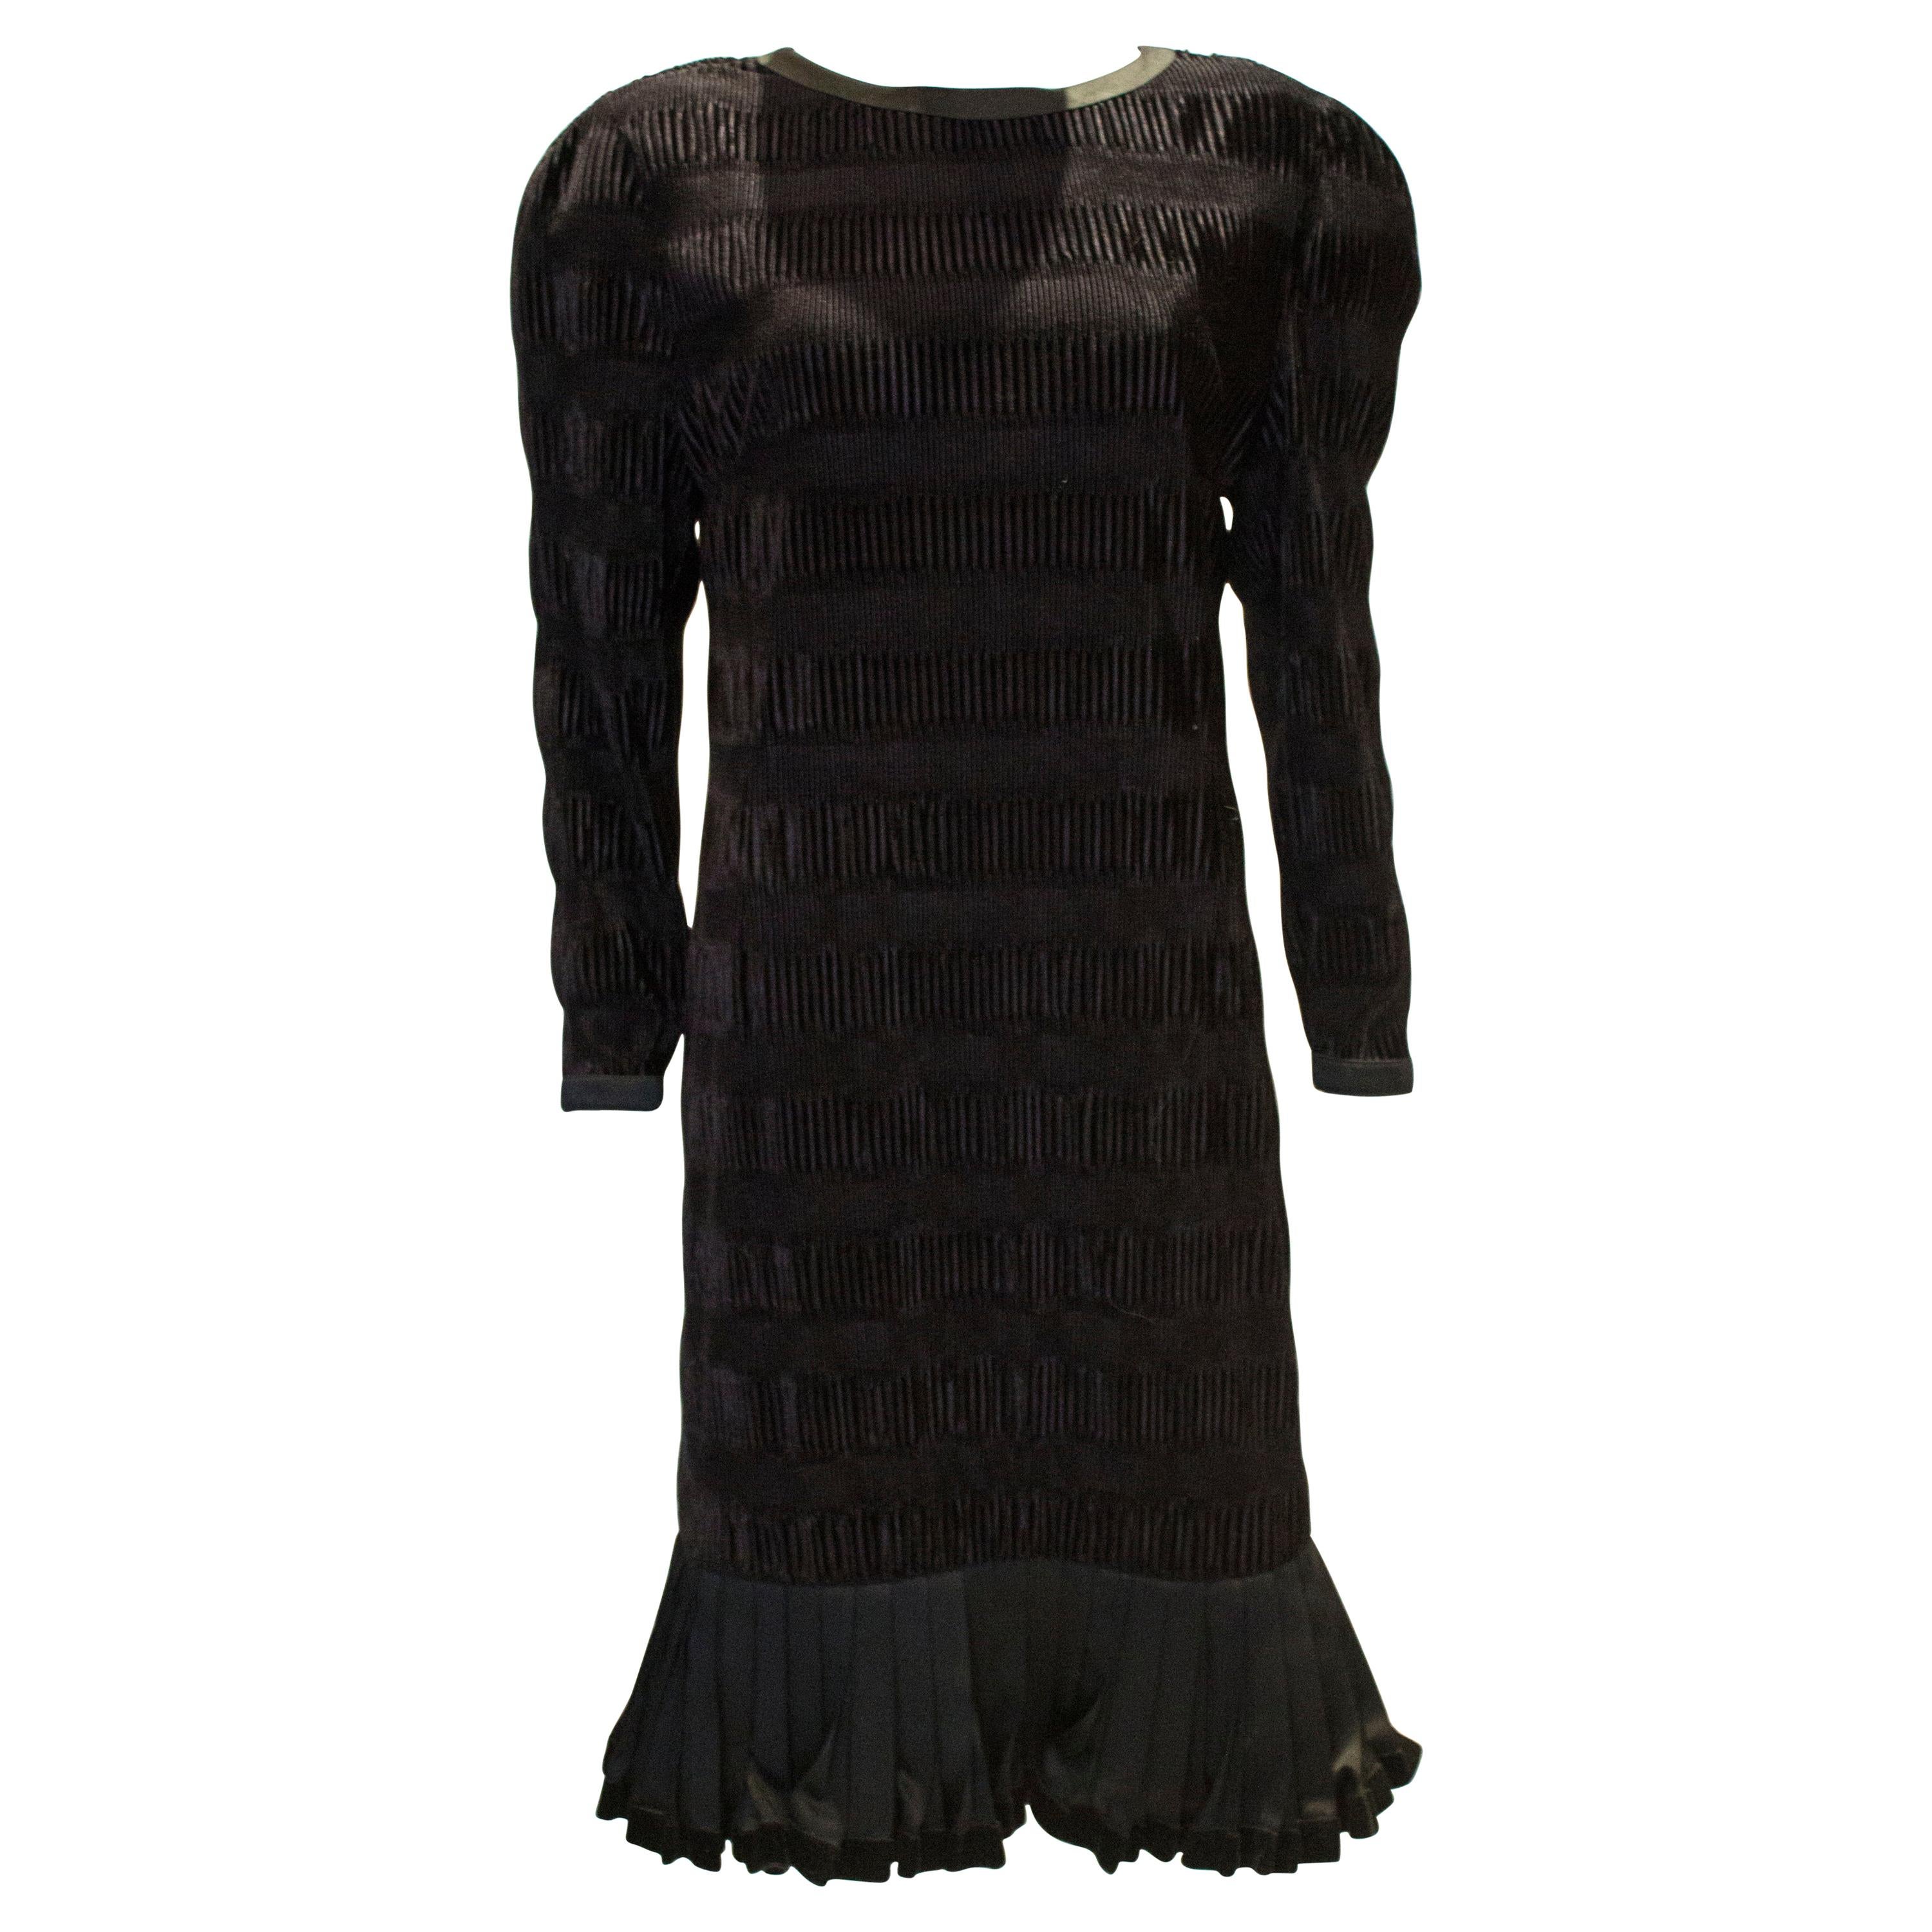 Vintage Louis Feraud Black Velvet Cocktail Dress